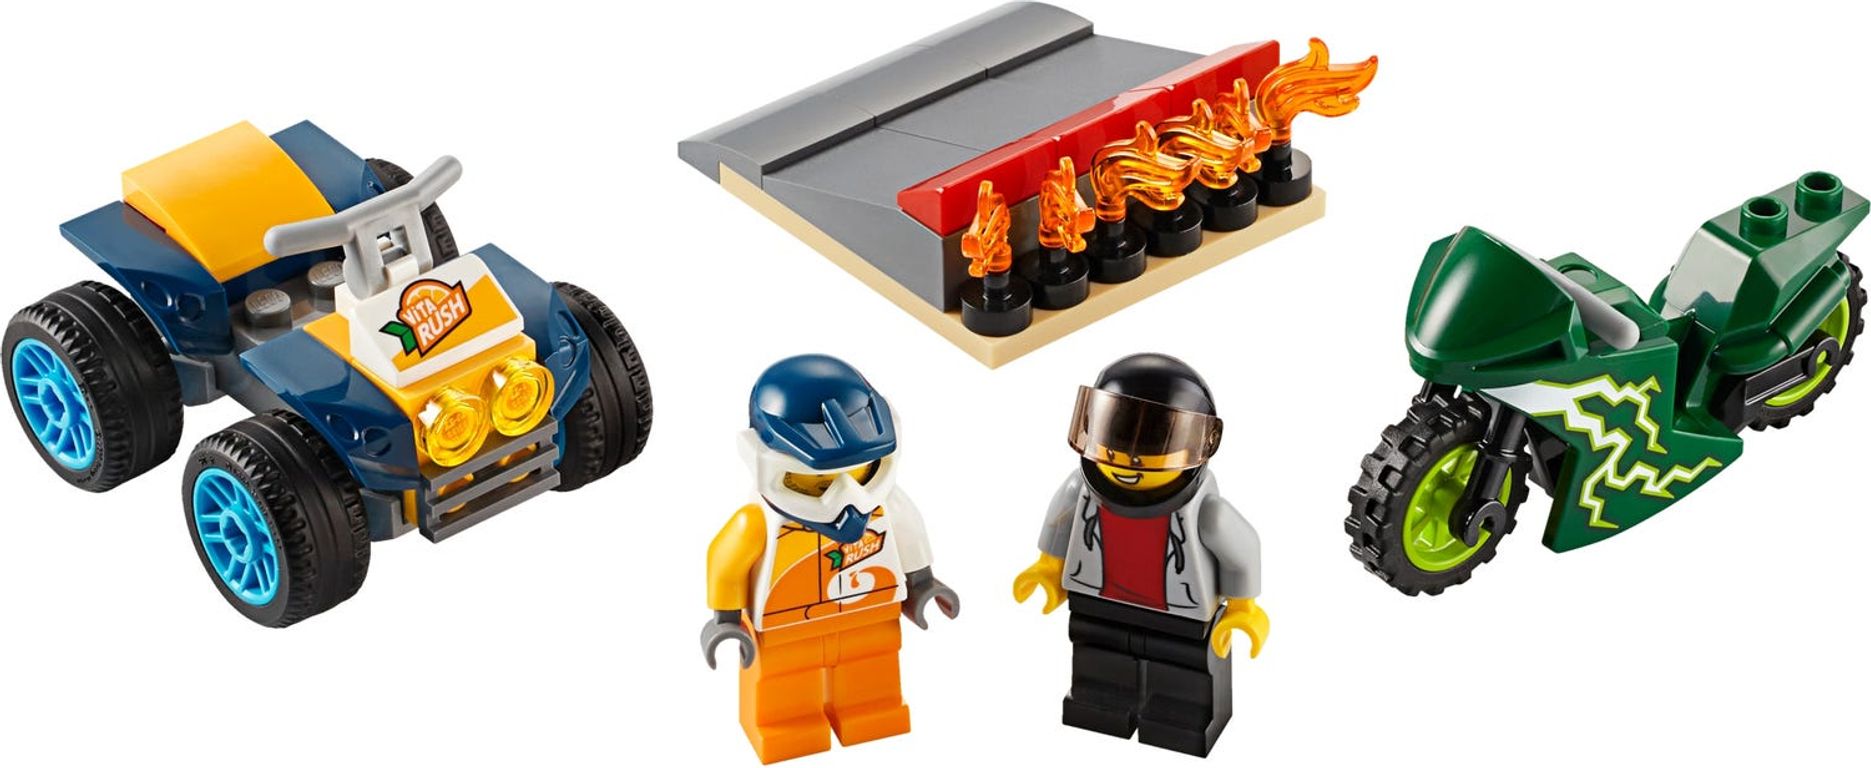 LEGO® City Stunt Team components